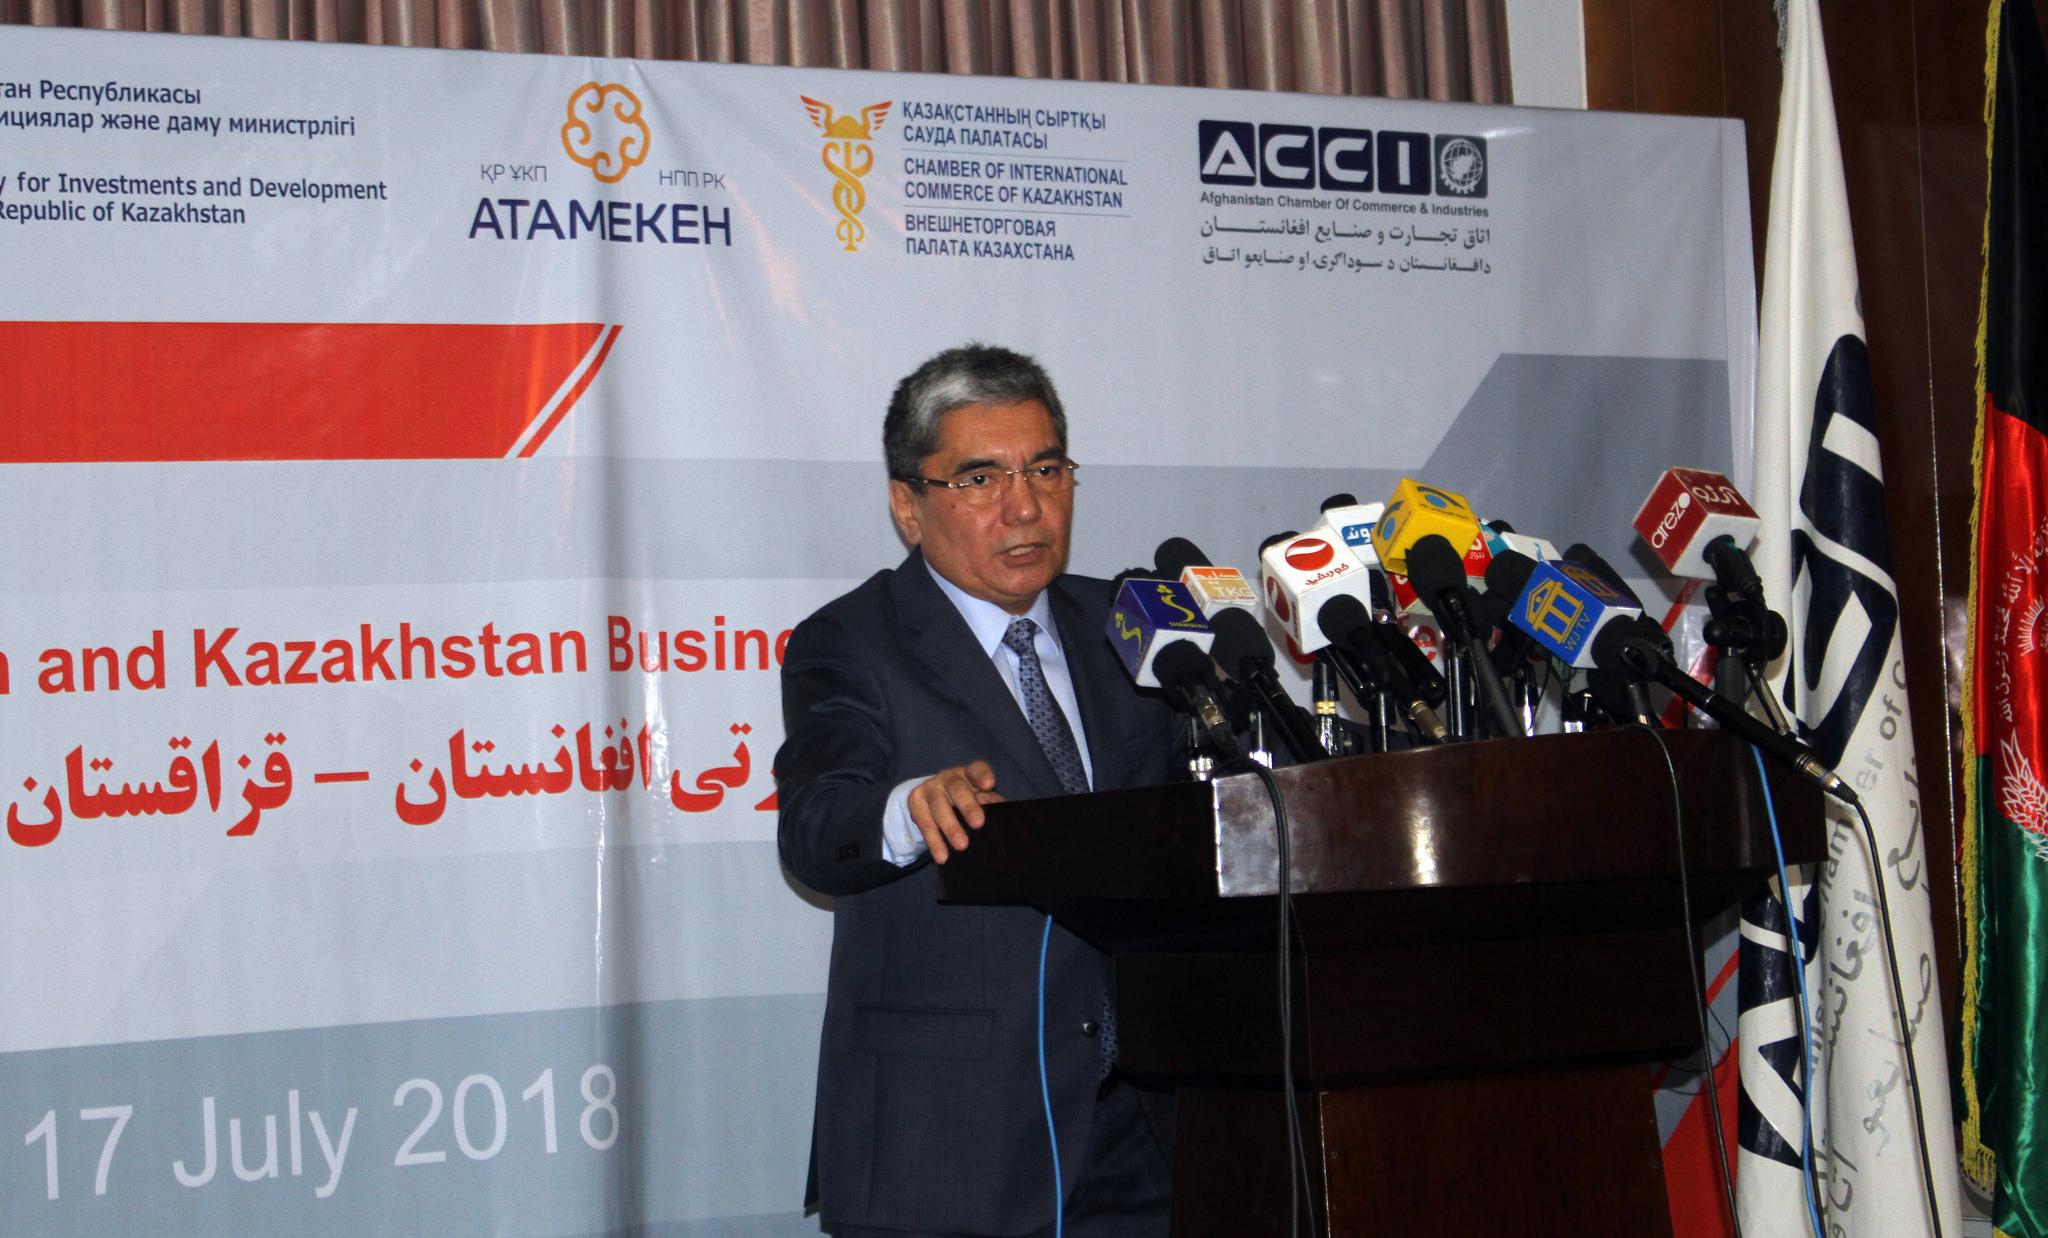 Kazakh Ambassador to Kabul in a press conferecne